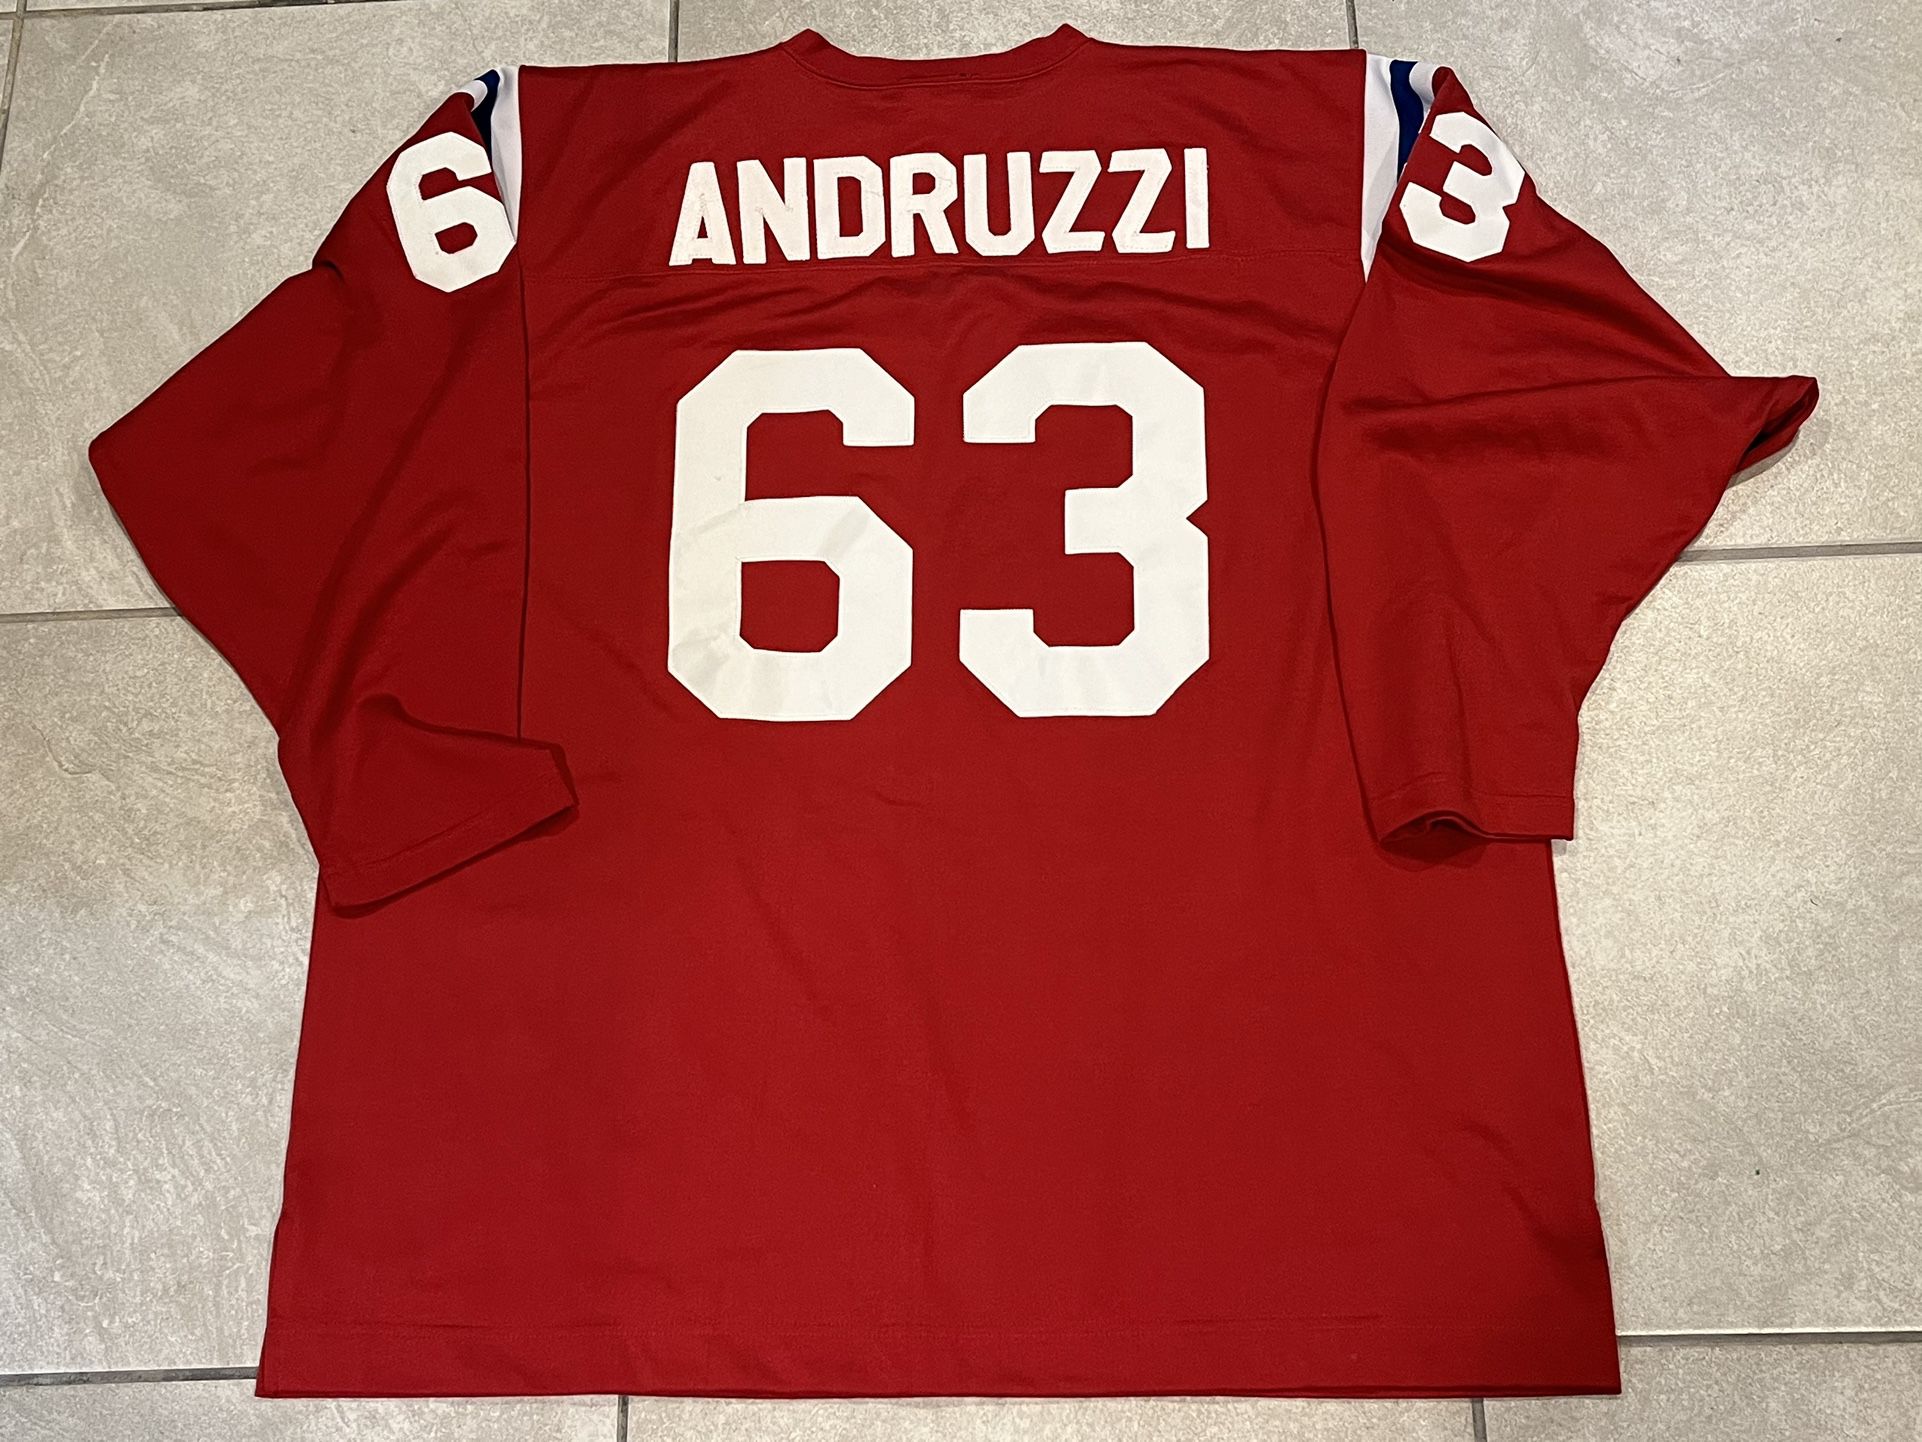 Joe Andruzzi New England Patriots Football Jersey 3XL Stall&dean Authentic Preowned